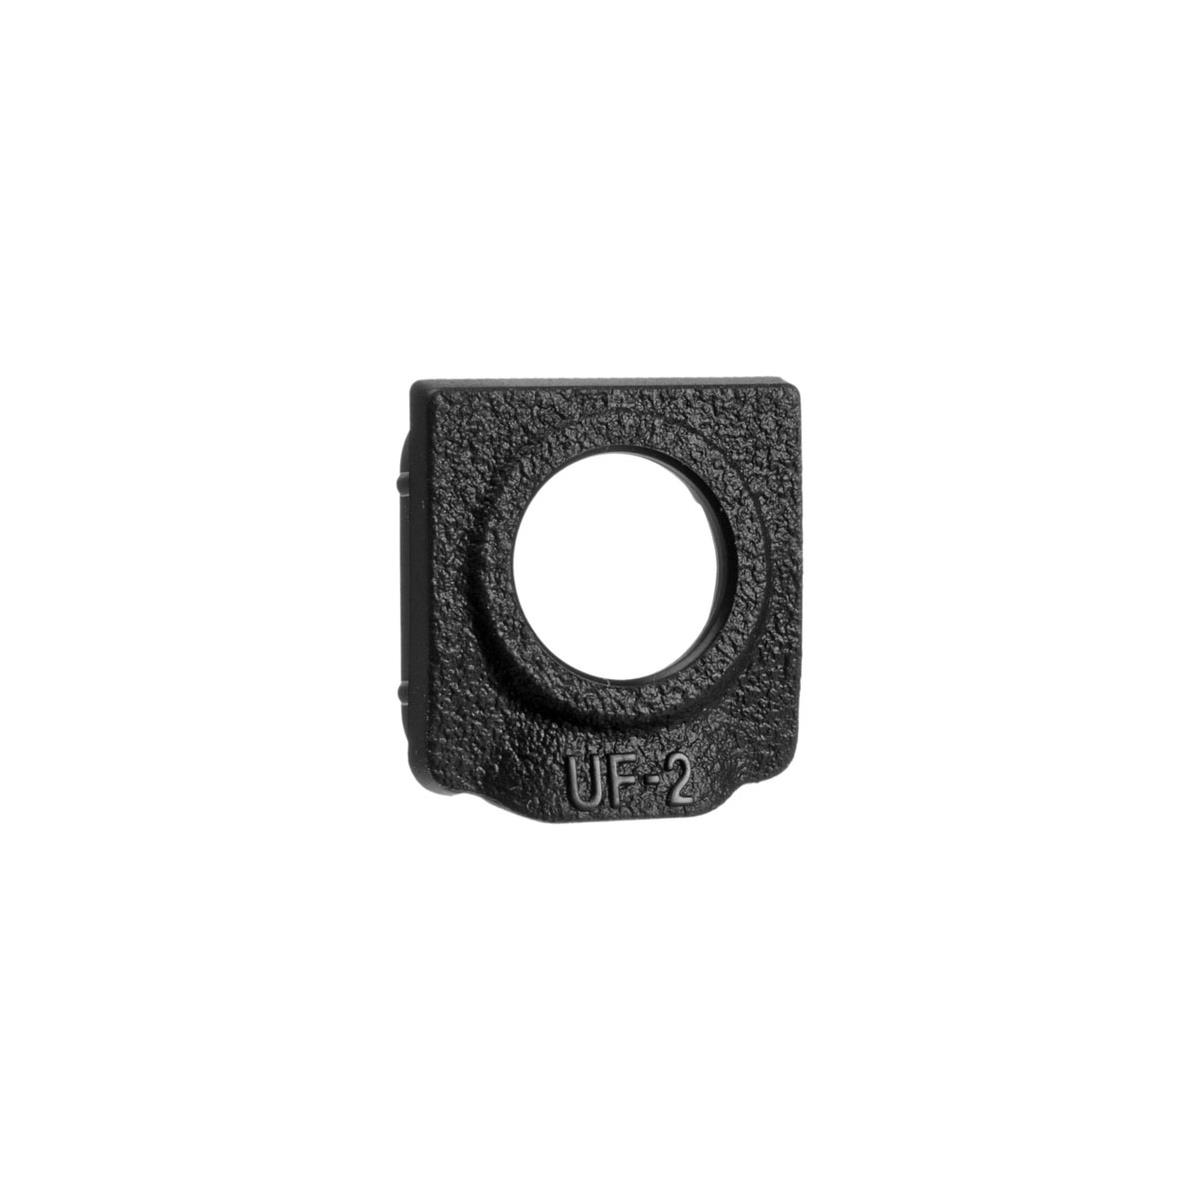 Nikon UF-2 Connector Cover for  Stereo Mini Plug Cable